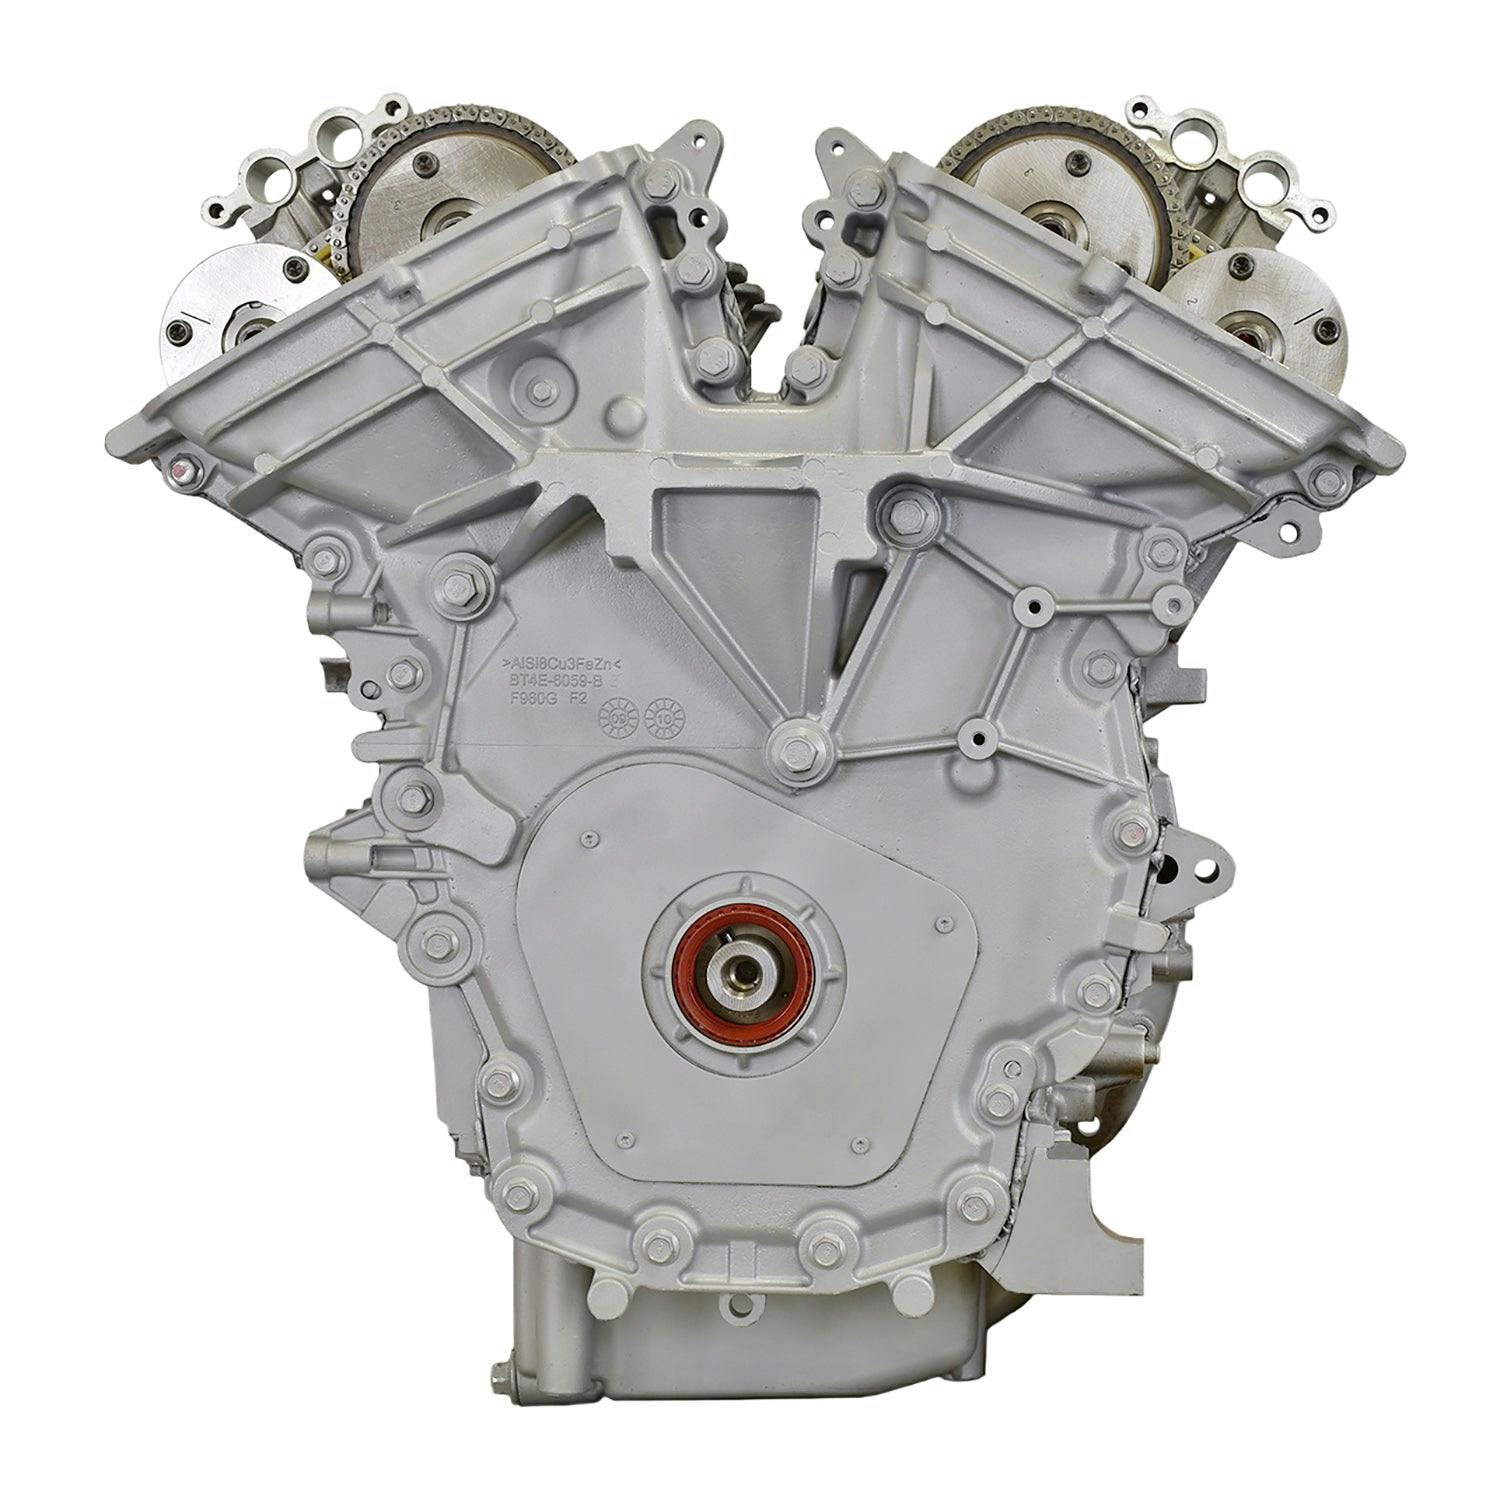 3.7L V6 Engine for 2013-2016 Ford Explorer, Police Interceptor Sedan, Police Interceptor Utility, Taurus/Lincoln MKS, MKT, MKX, MKZ